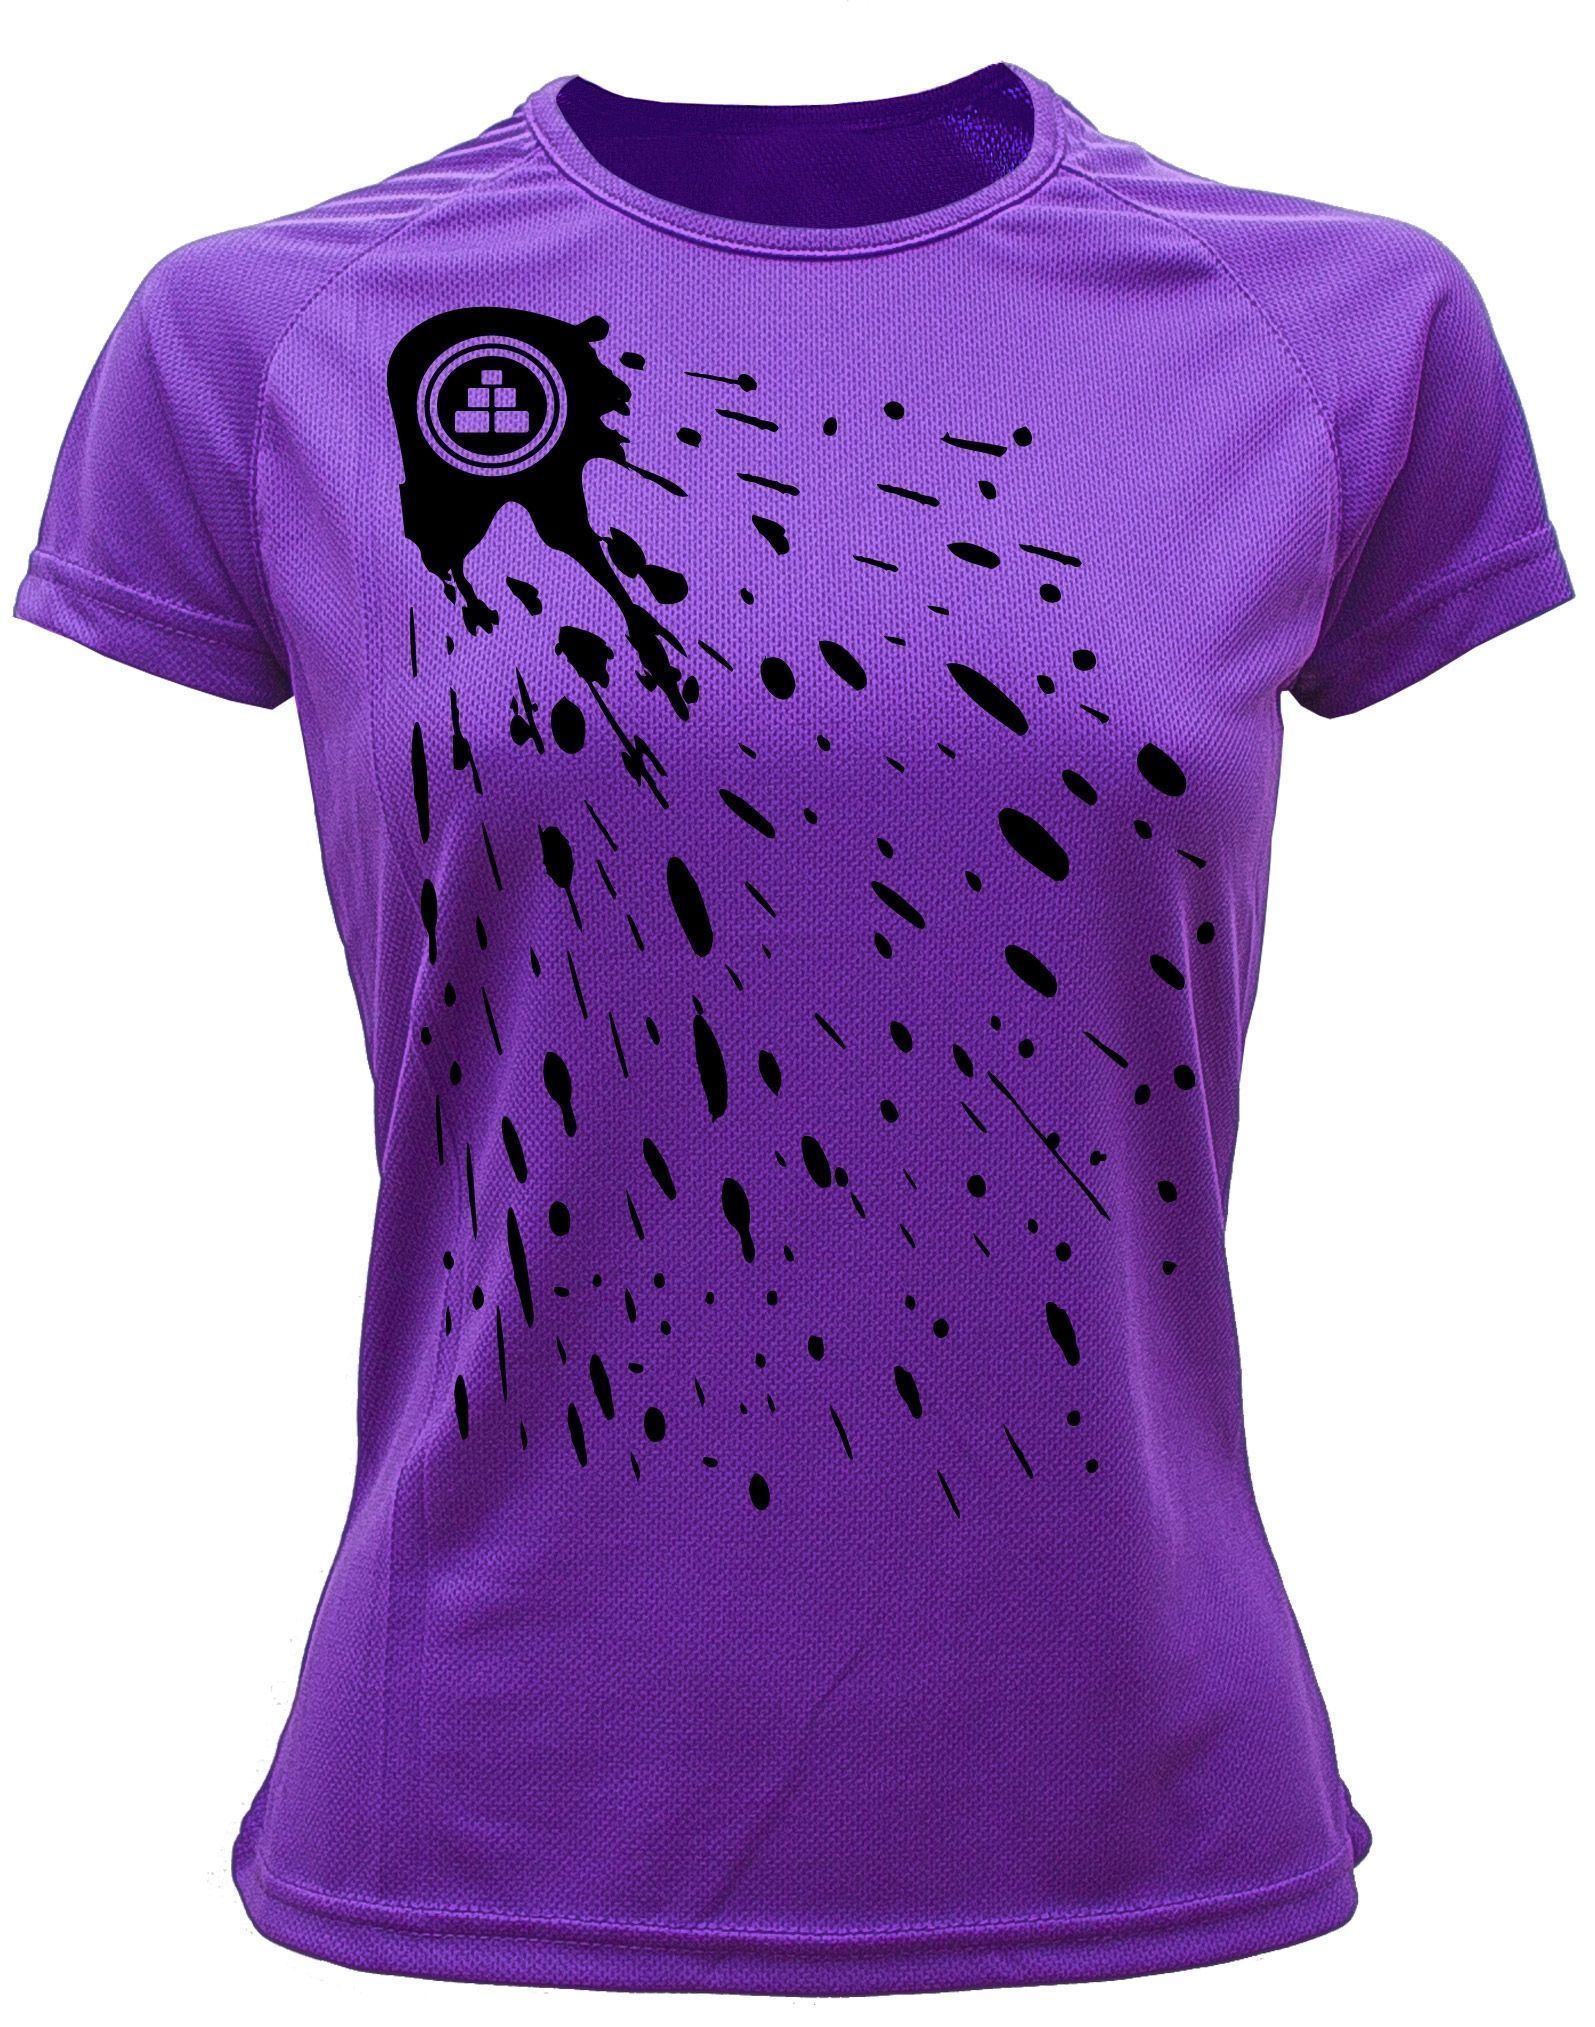 Camiseta deportiva Mujer pintura Violeta